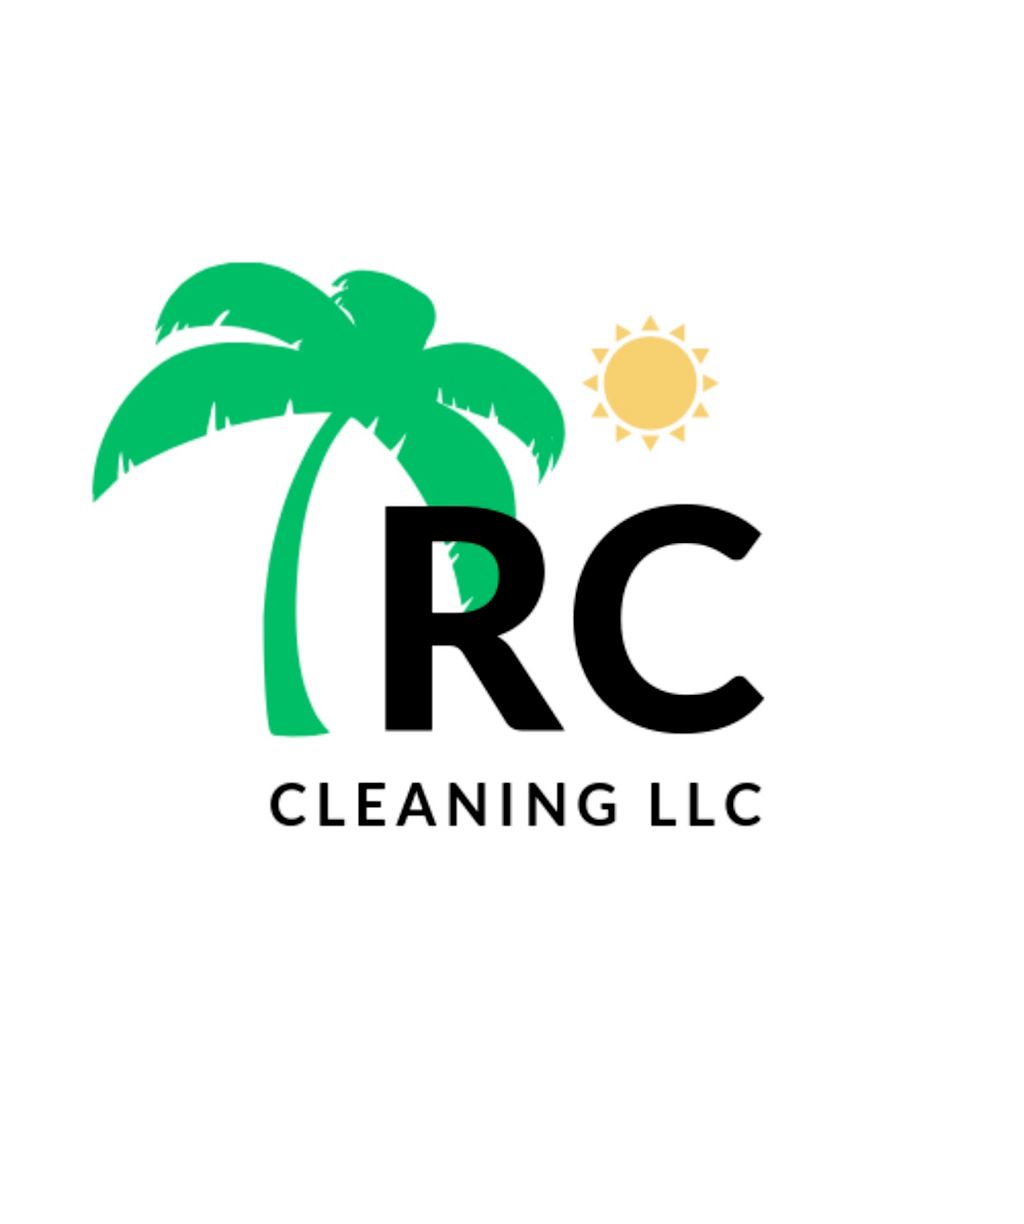 IRC Cleaning LLC